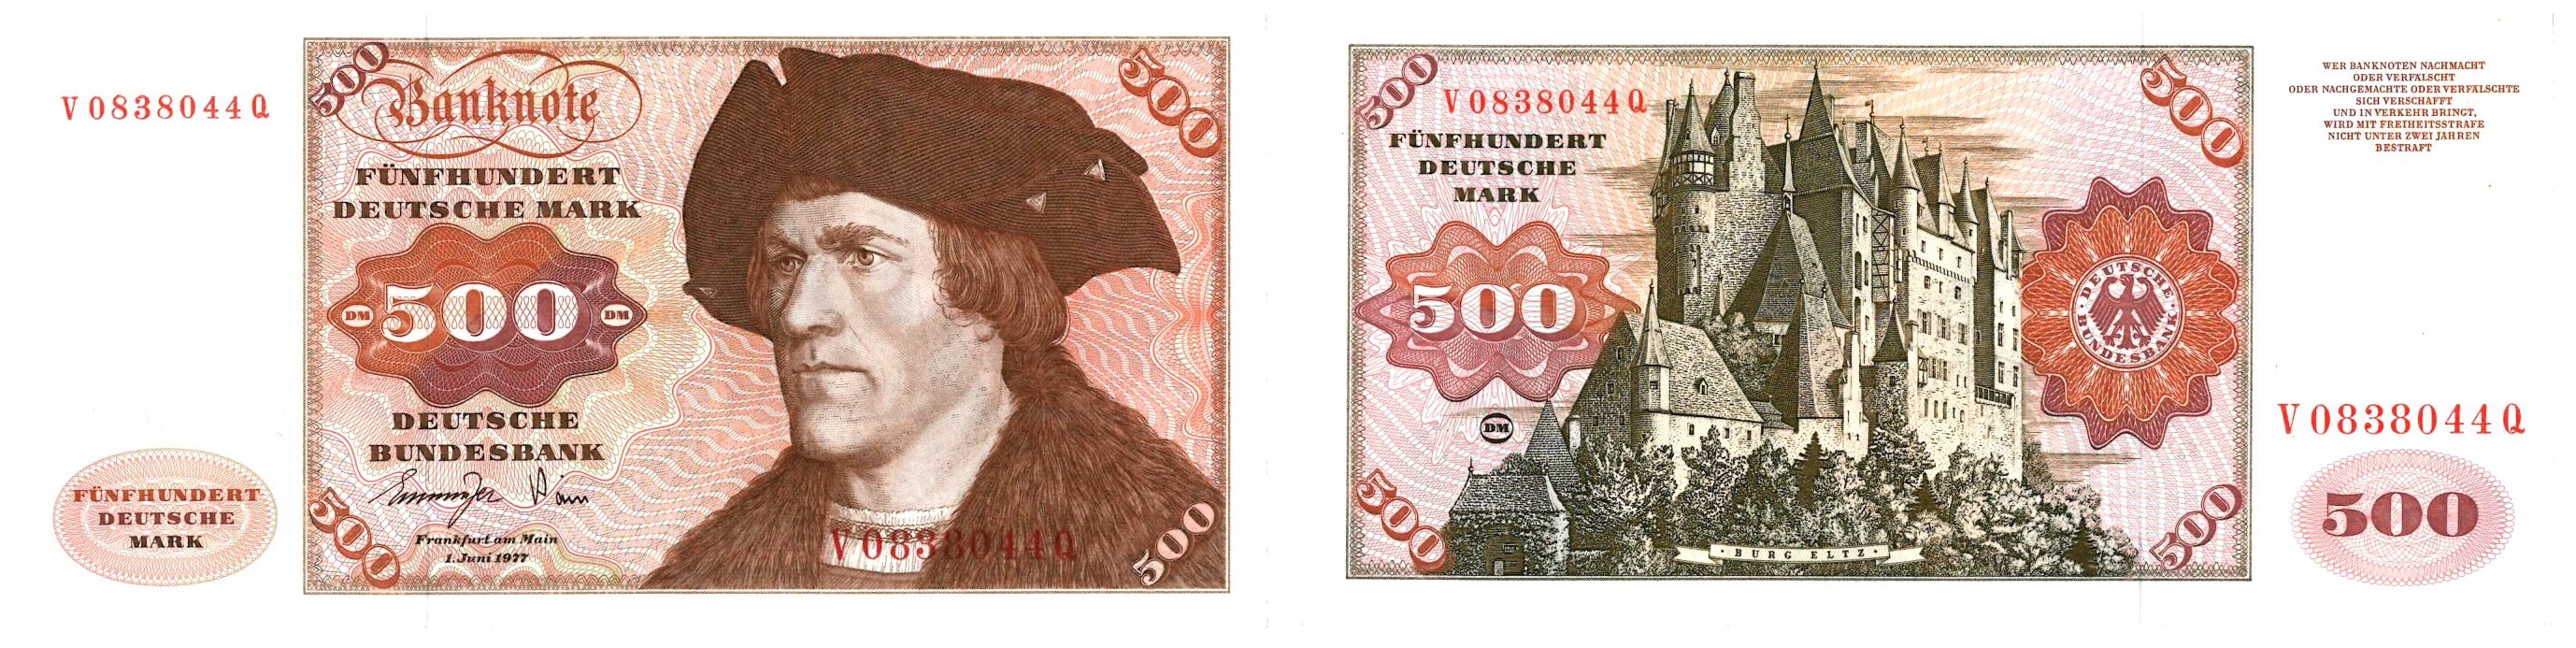 Deutsche mark. 500 Немецких марок. Купюра марка фрг500. 500 Дойч марок. 500 Дойч марок банкноты.